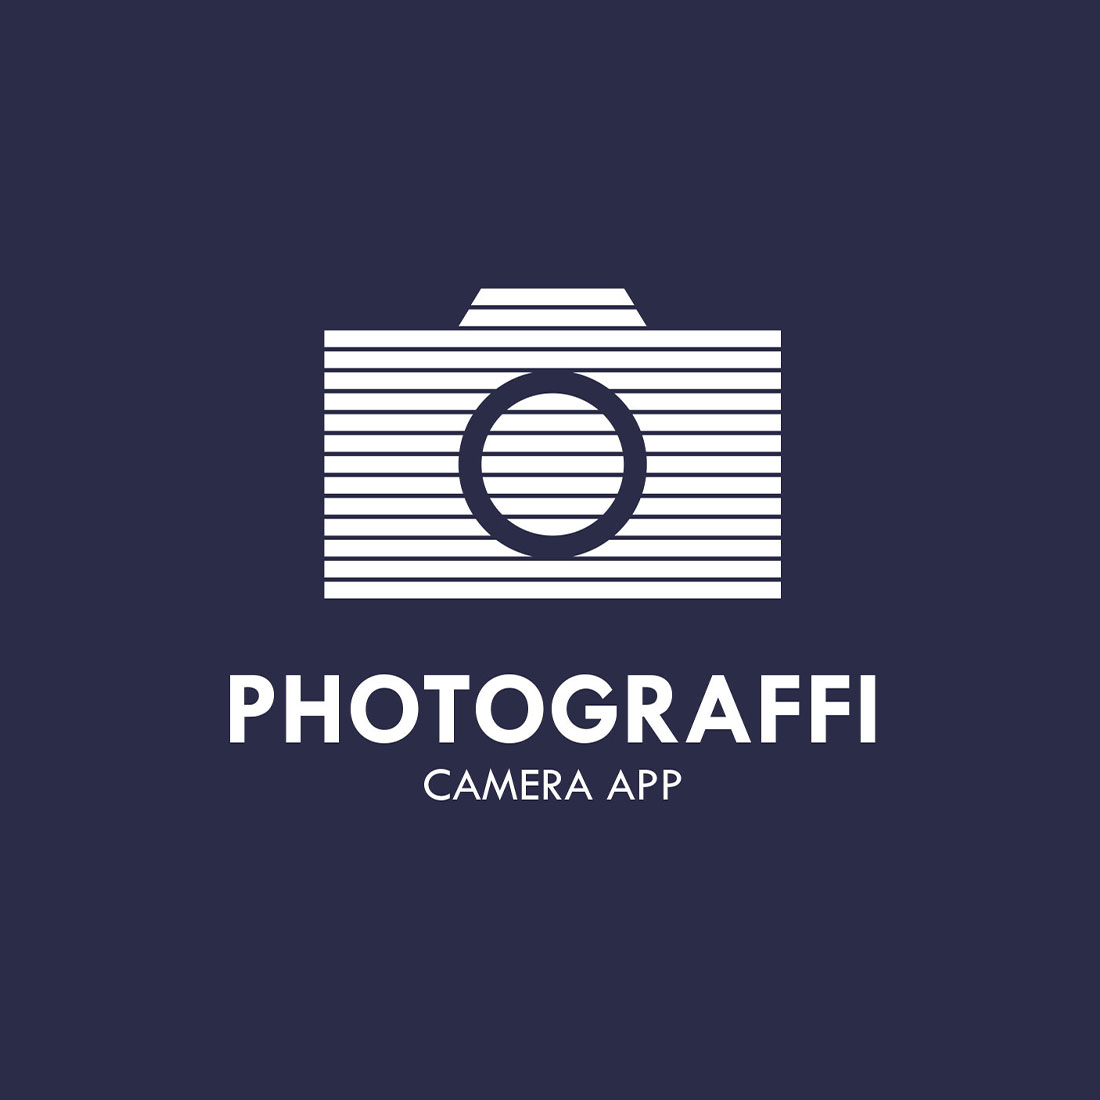 Photography Camera Vector Logo Set cover image.